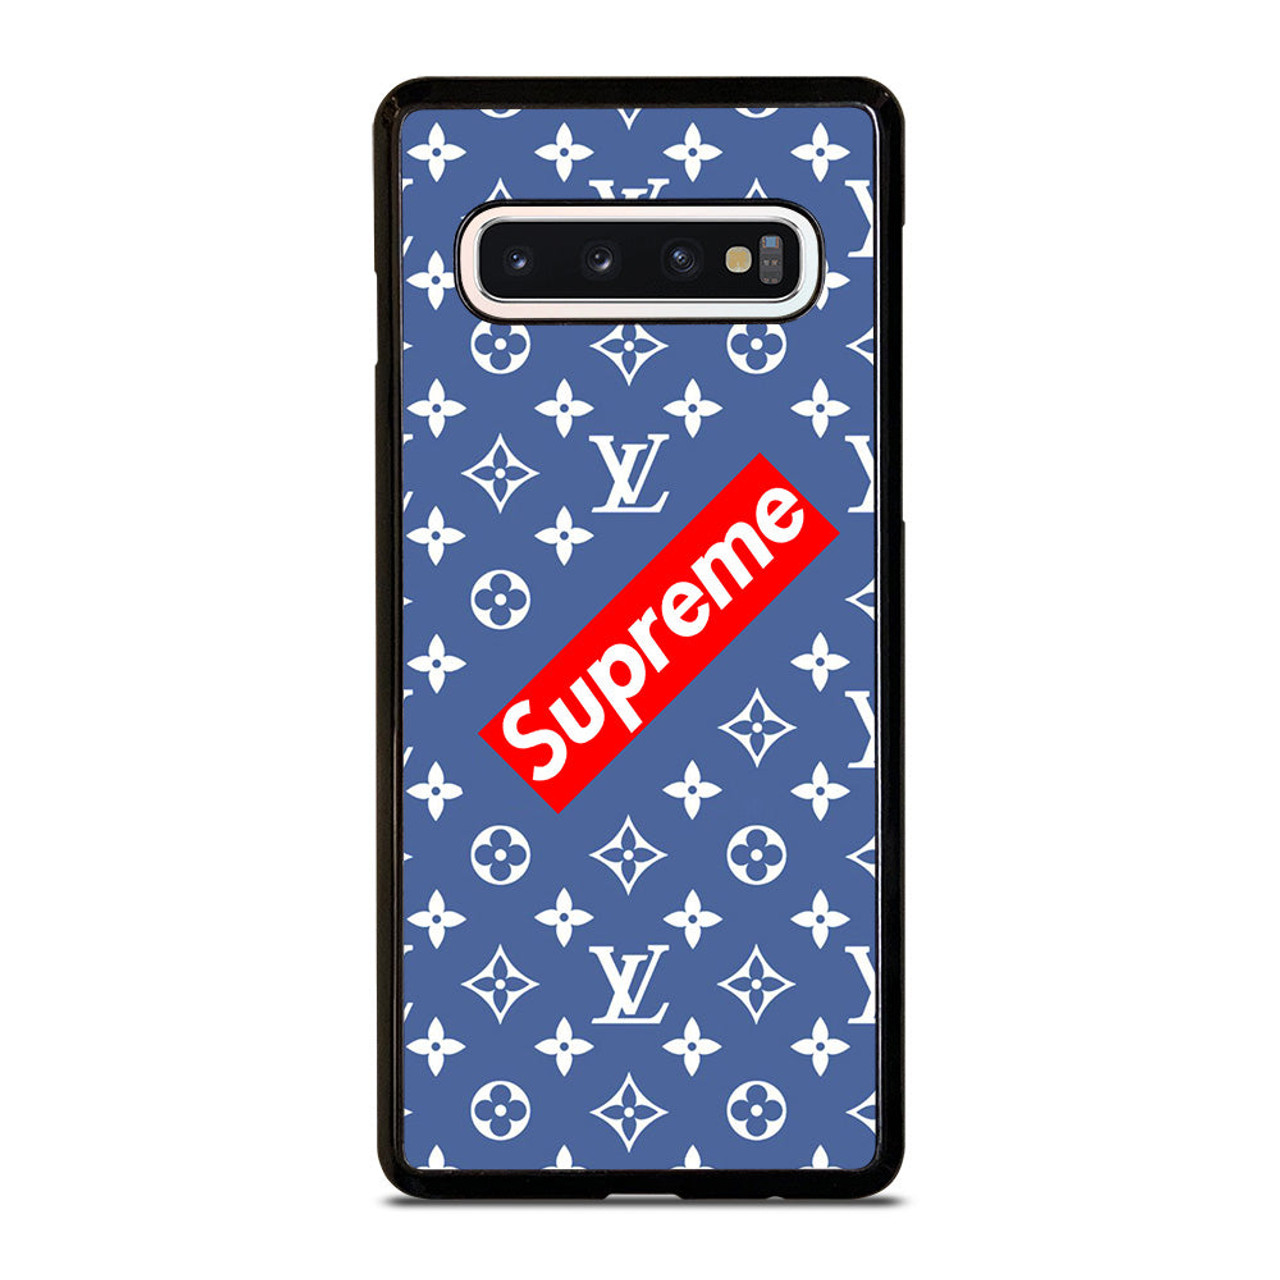 NEW SUPREME LOUIS VUITTON BLUE Samsung Galaxy S10 Case Cover